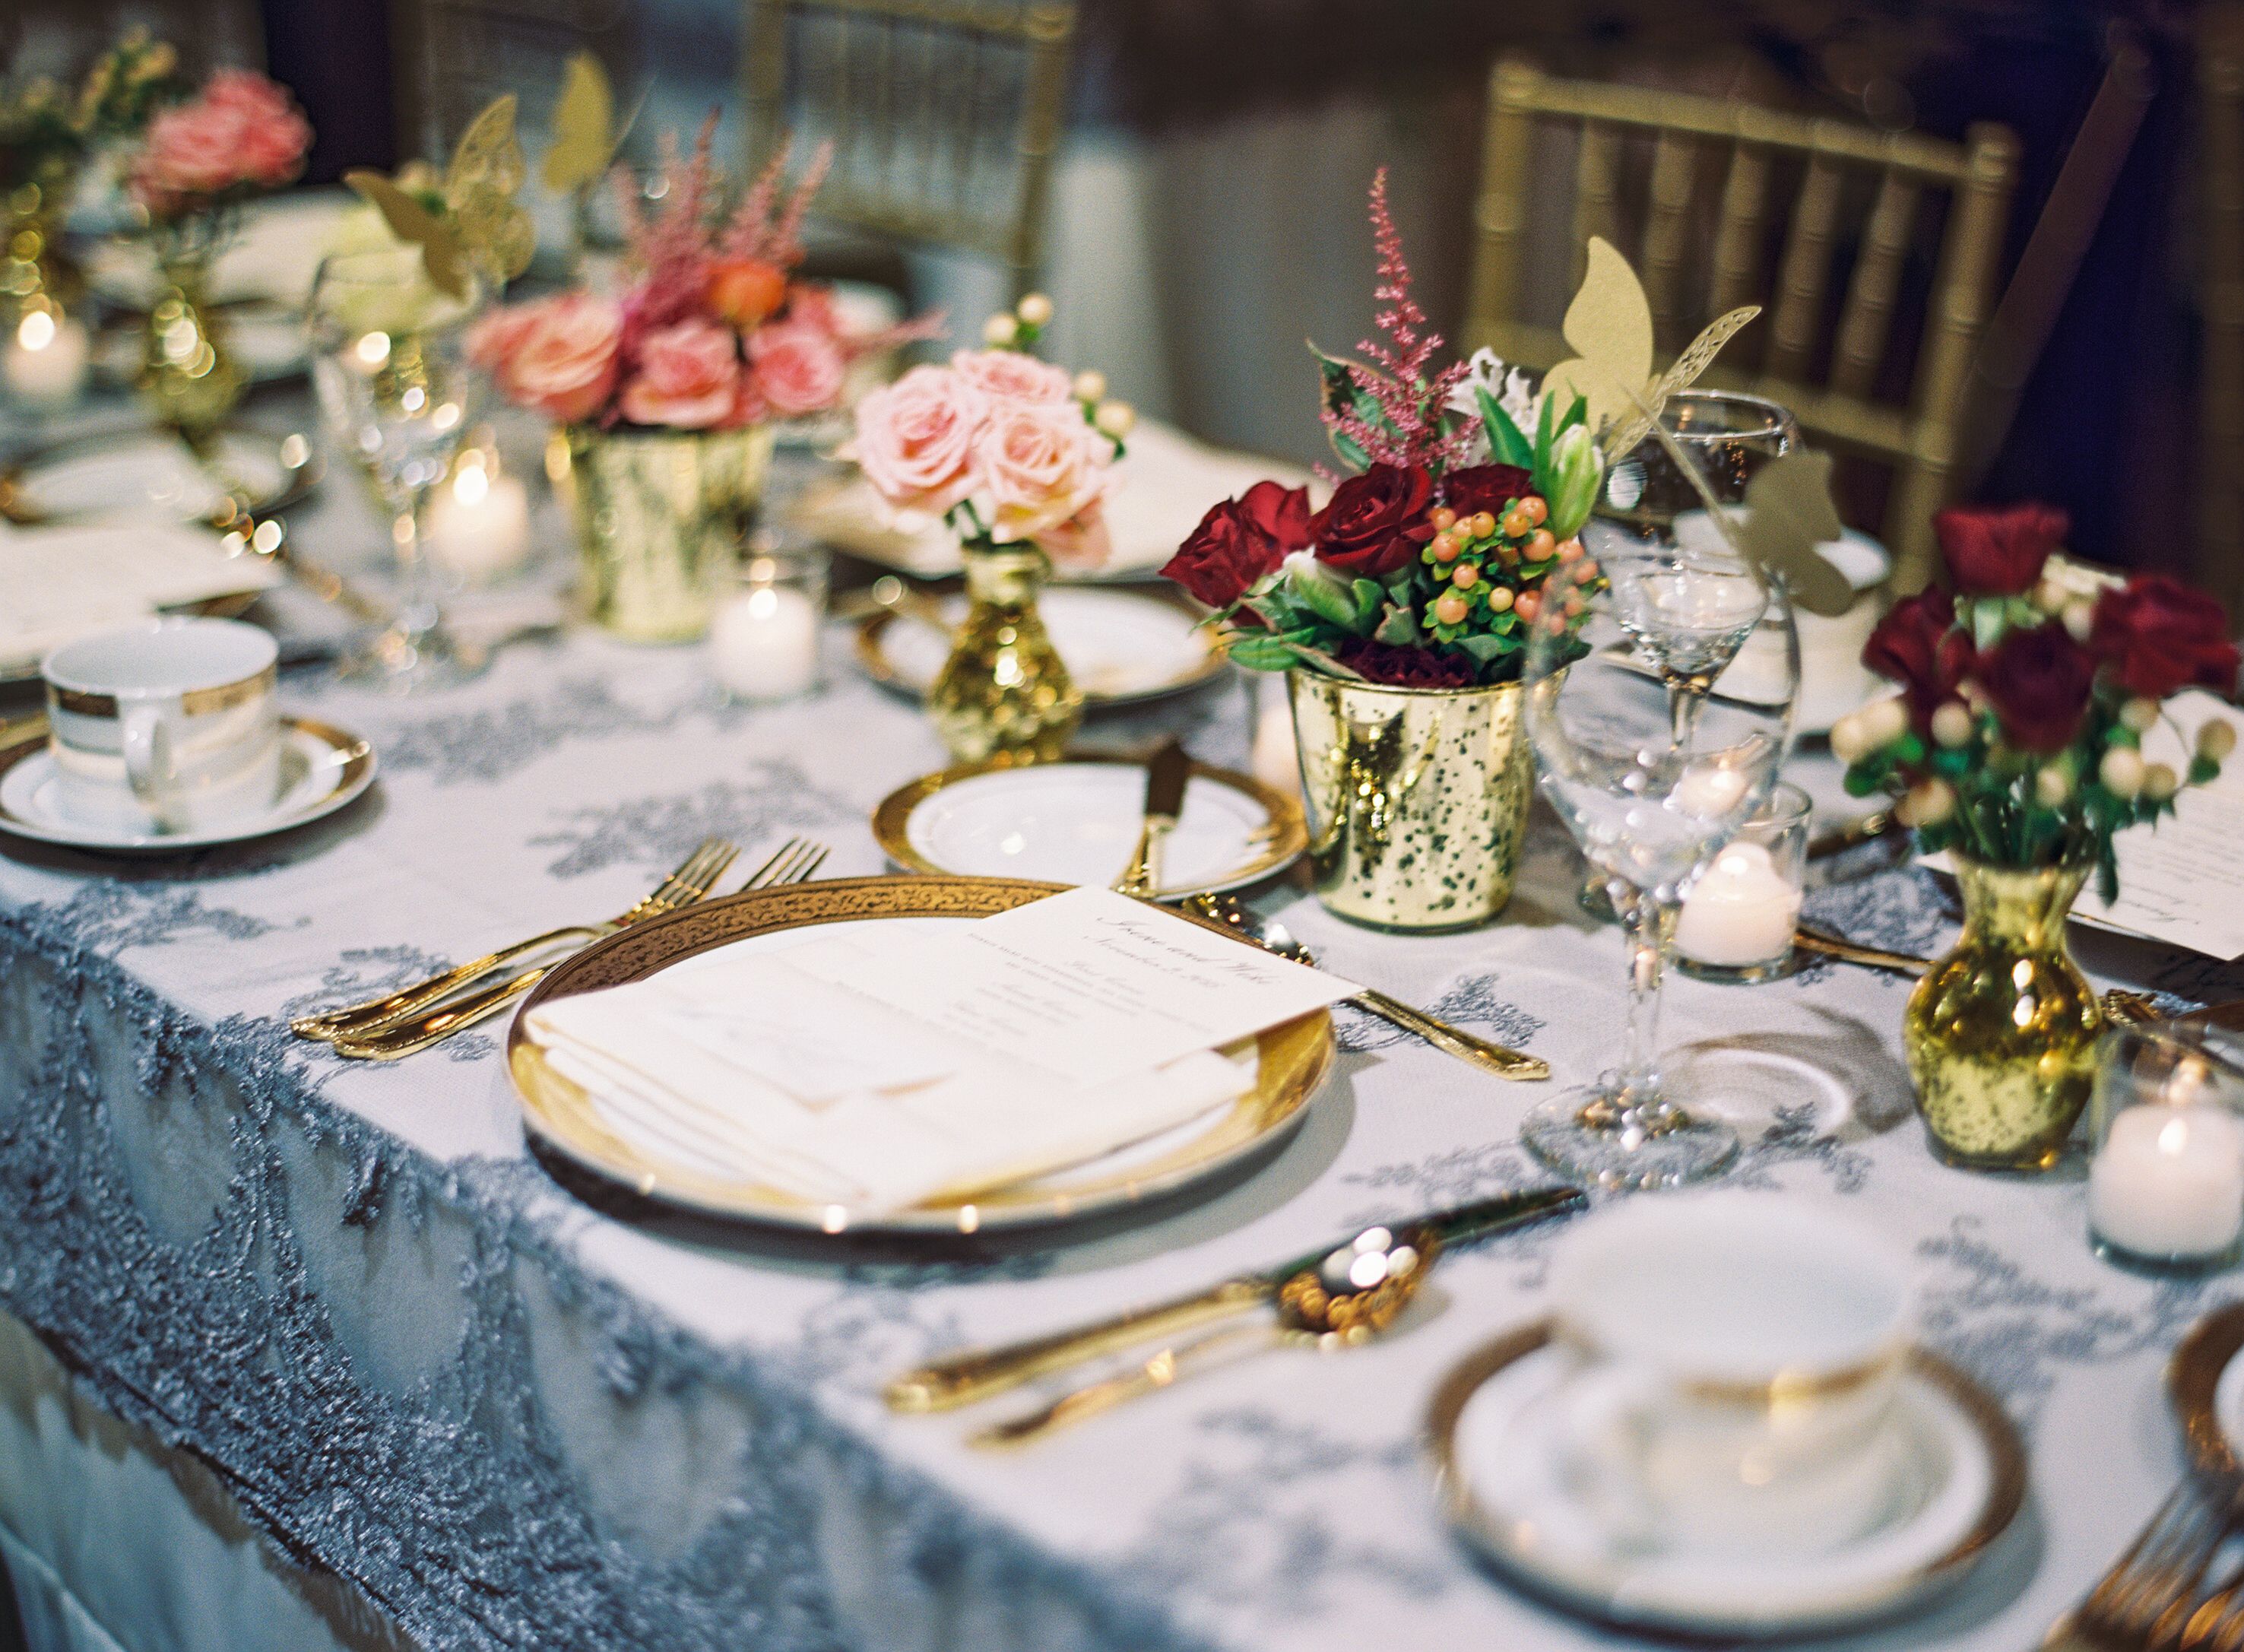 50 Prettiest Wedding Tables Wedding Tablescape Ideas